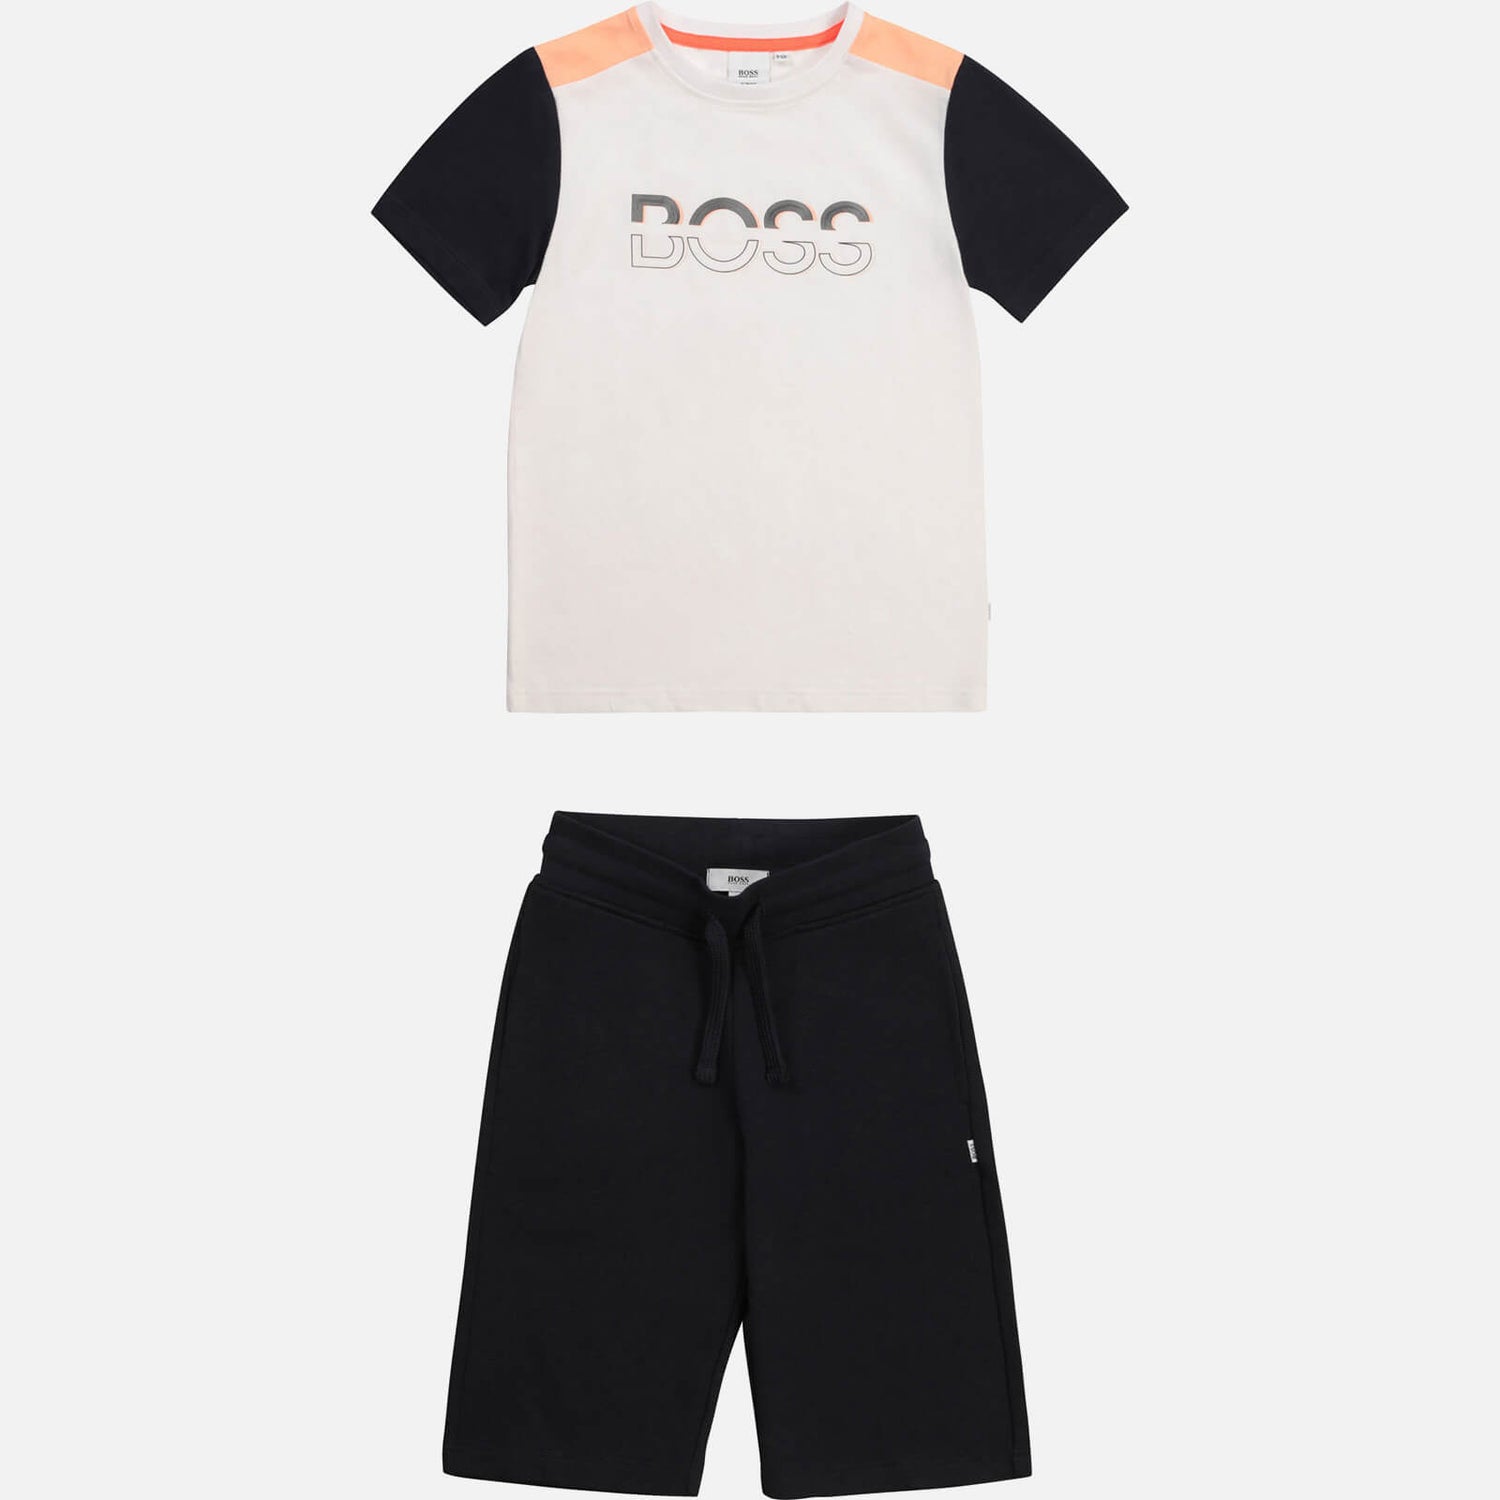 Hugo Boss Boys' T-Shirt and Bermuda Shorts Set - Unique